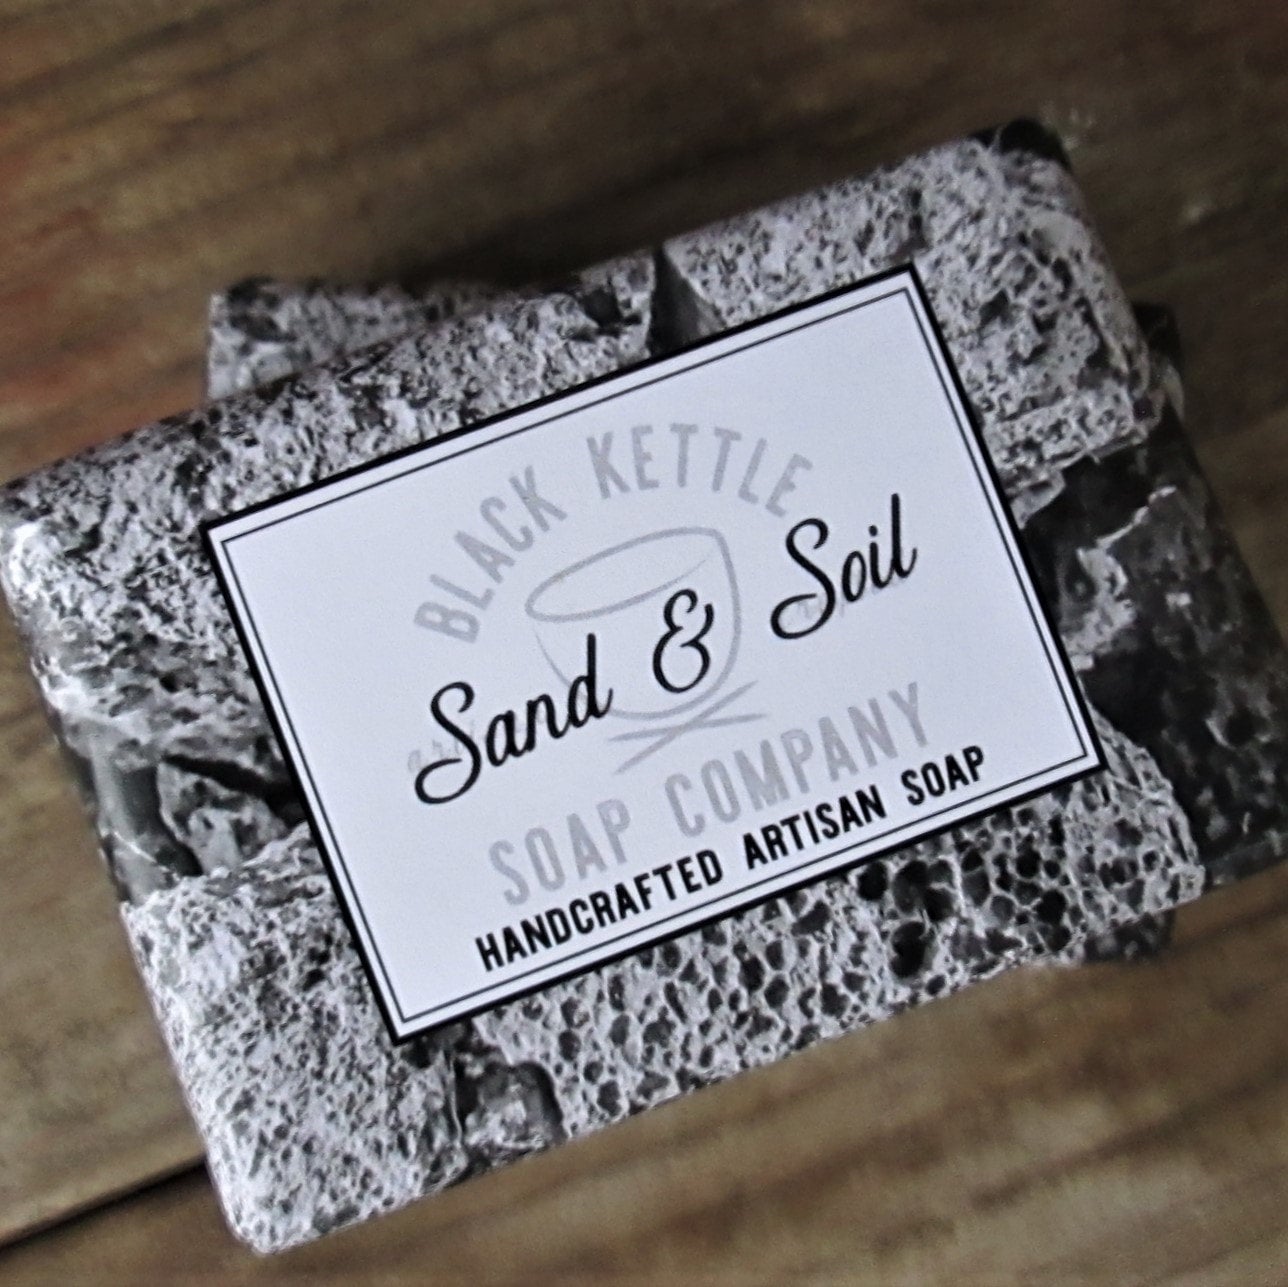 BLOOD ORANGE Soap – Black Kettle Soap Company